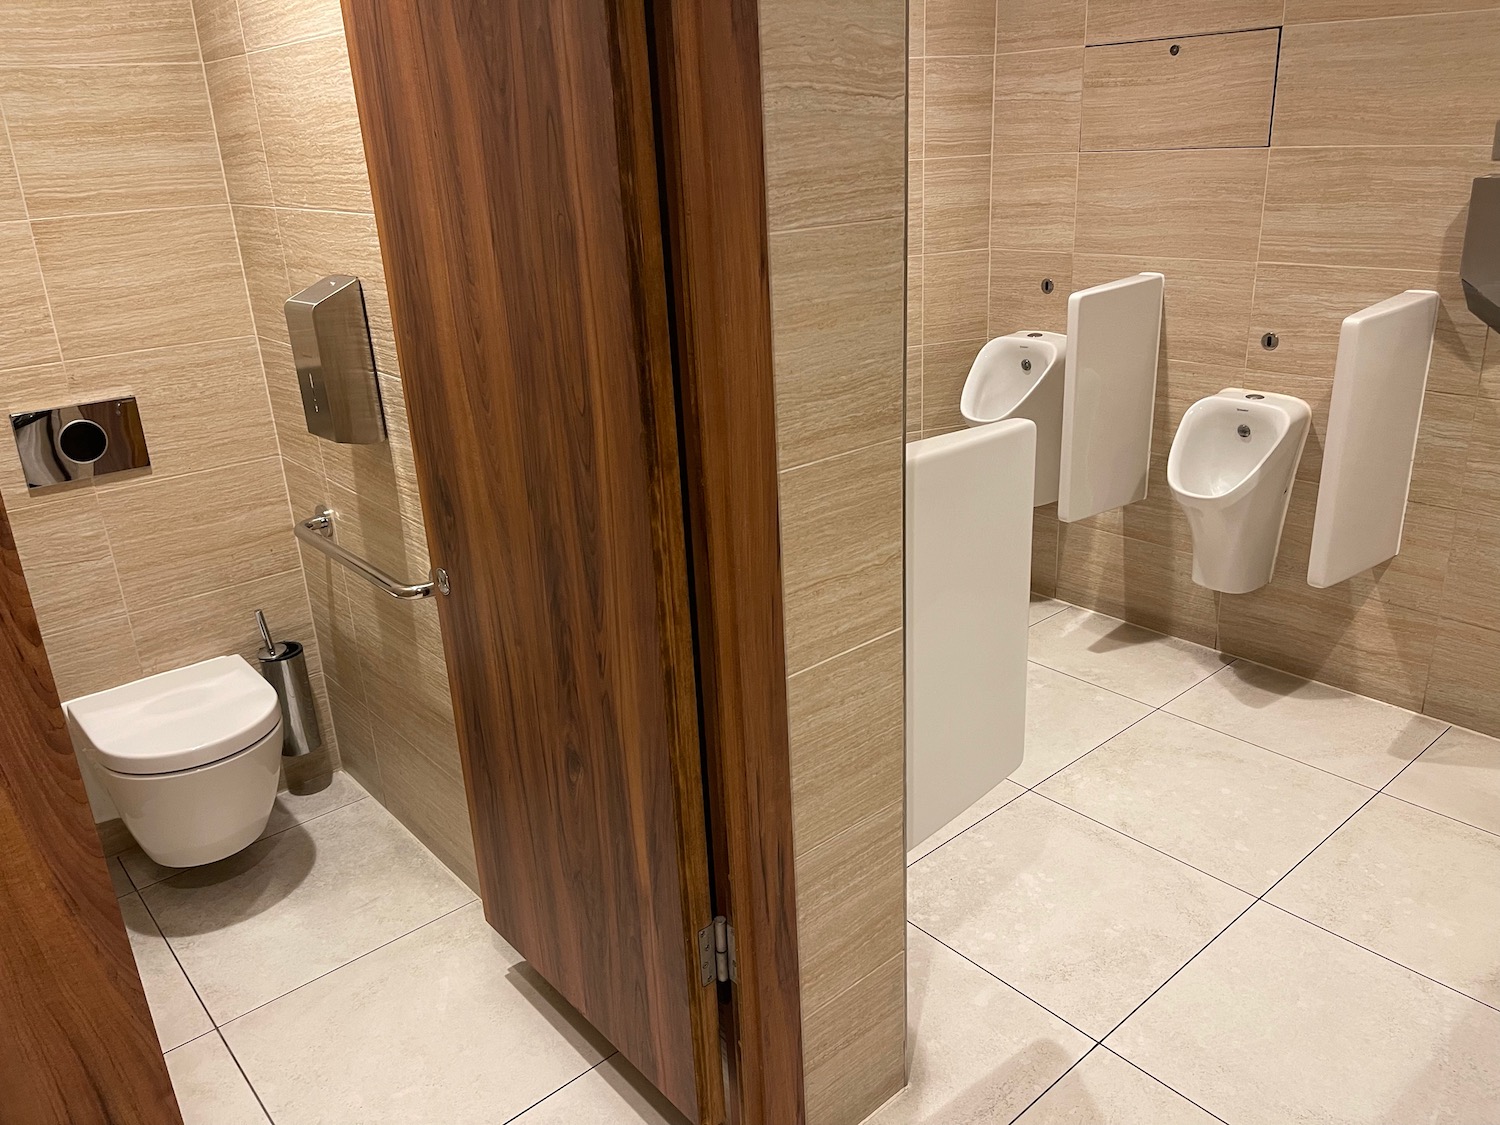 a bathroom with urinals and a wood door